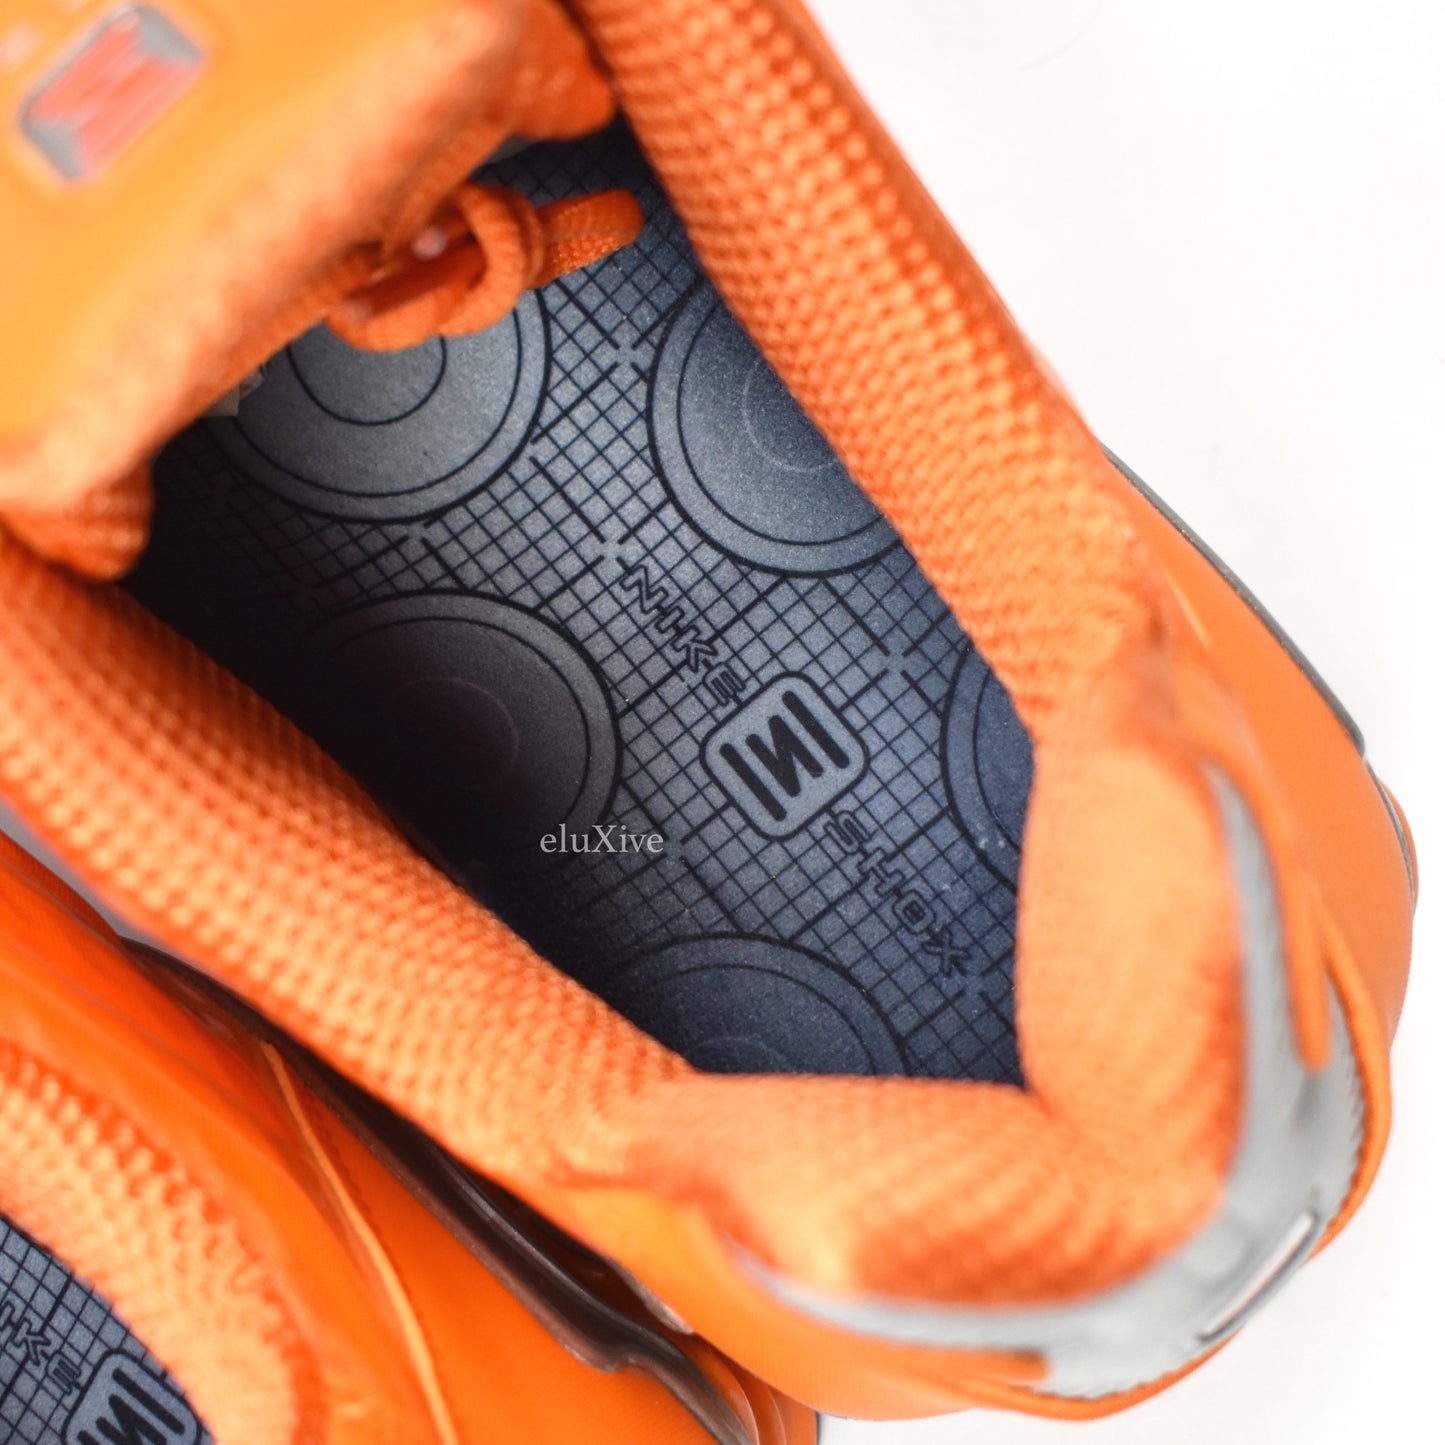 Nike - Shox TL (Clay Orange)